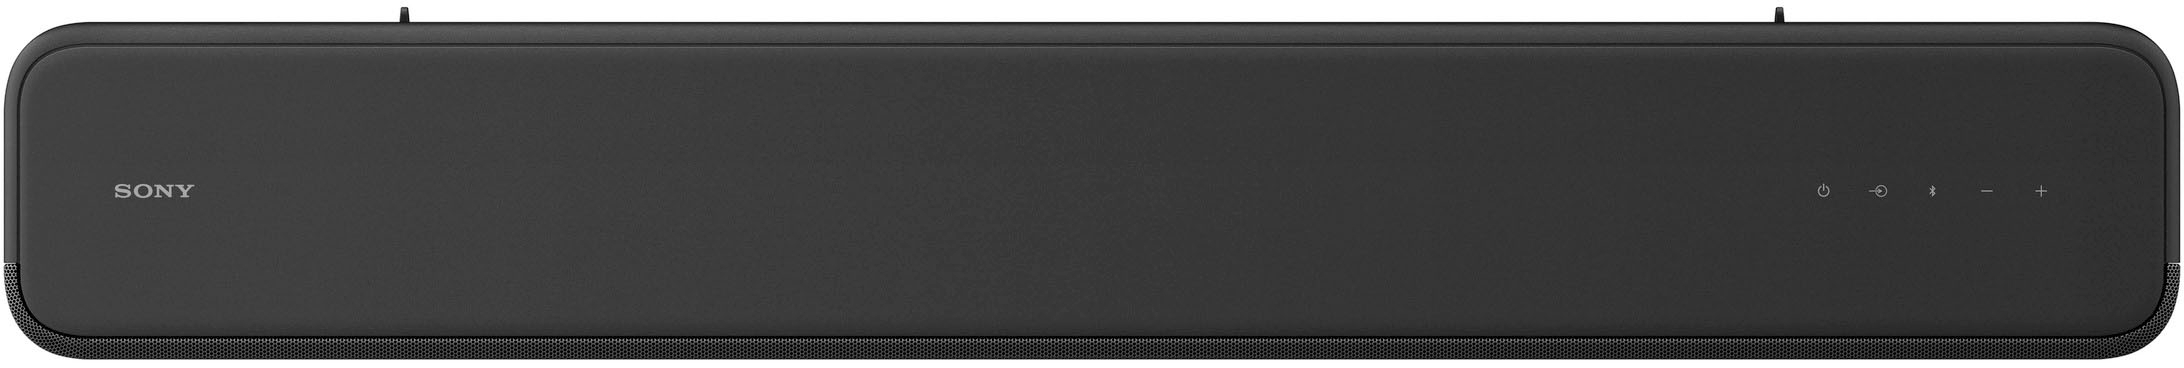 HT-S2000 Sony 3.1ch Best Dolby HTS2000 Buy Atmos - Black Soundbar Compact